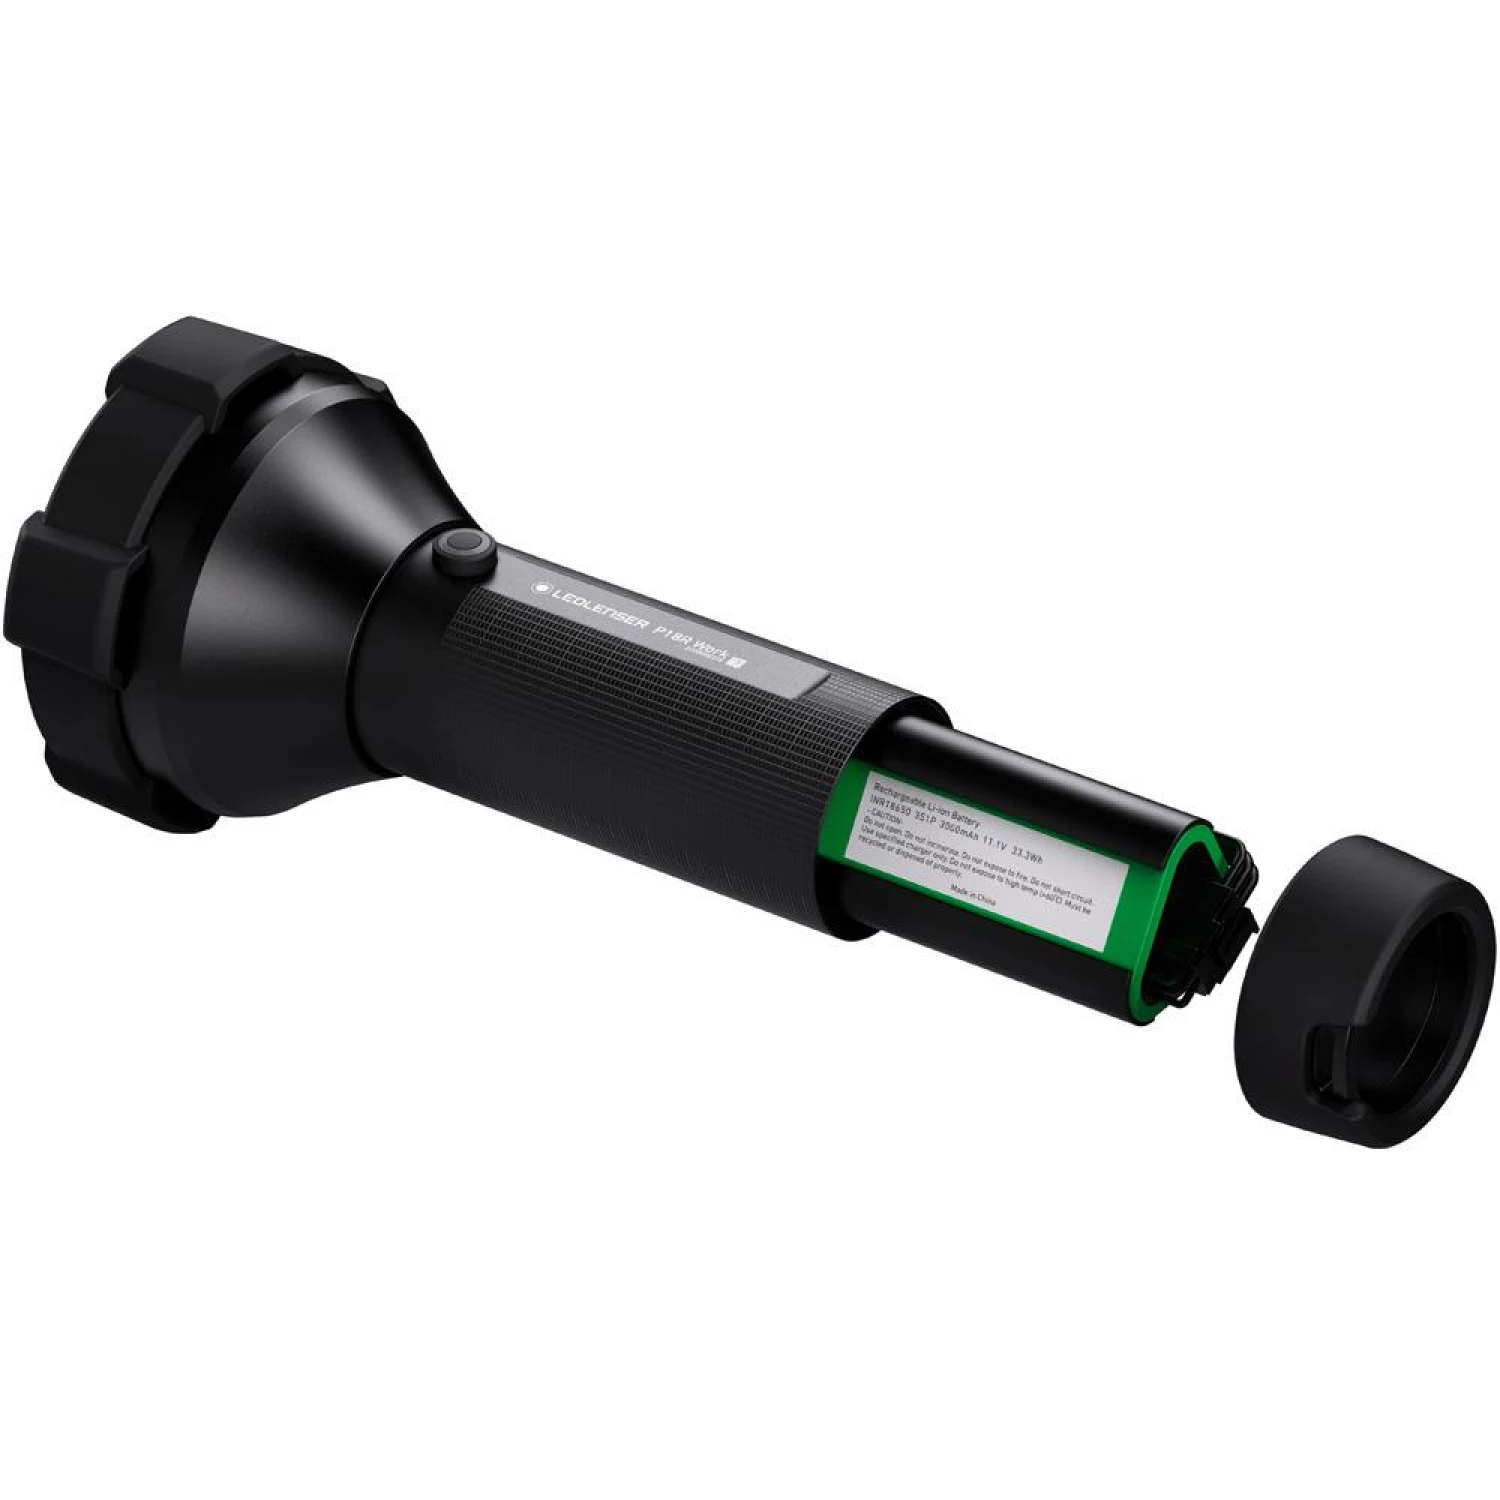 Фонарь светодиодный LED Lenser P18R Work, 4500 лм, аккумулятор - фото 3